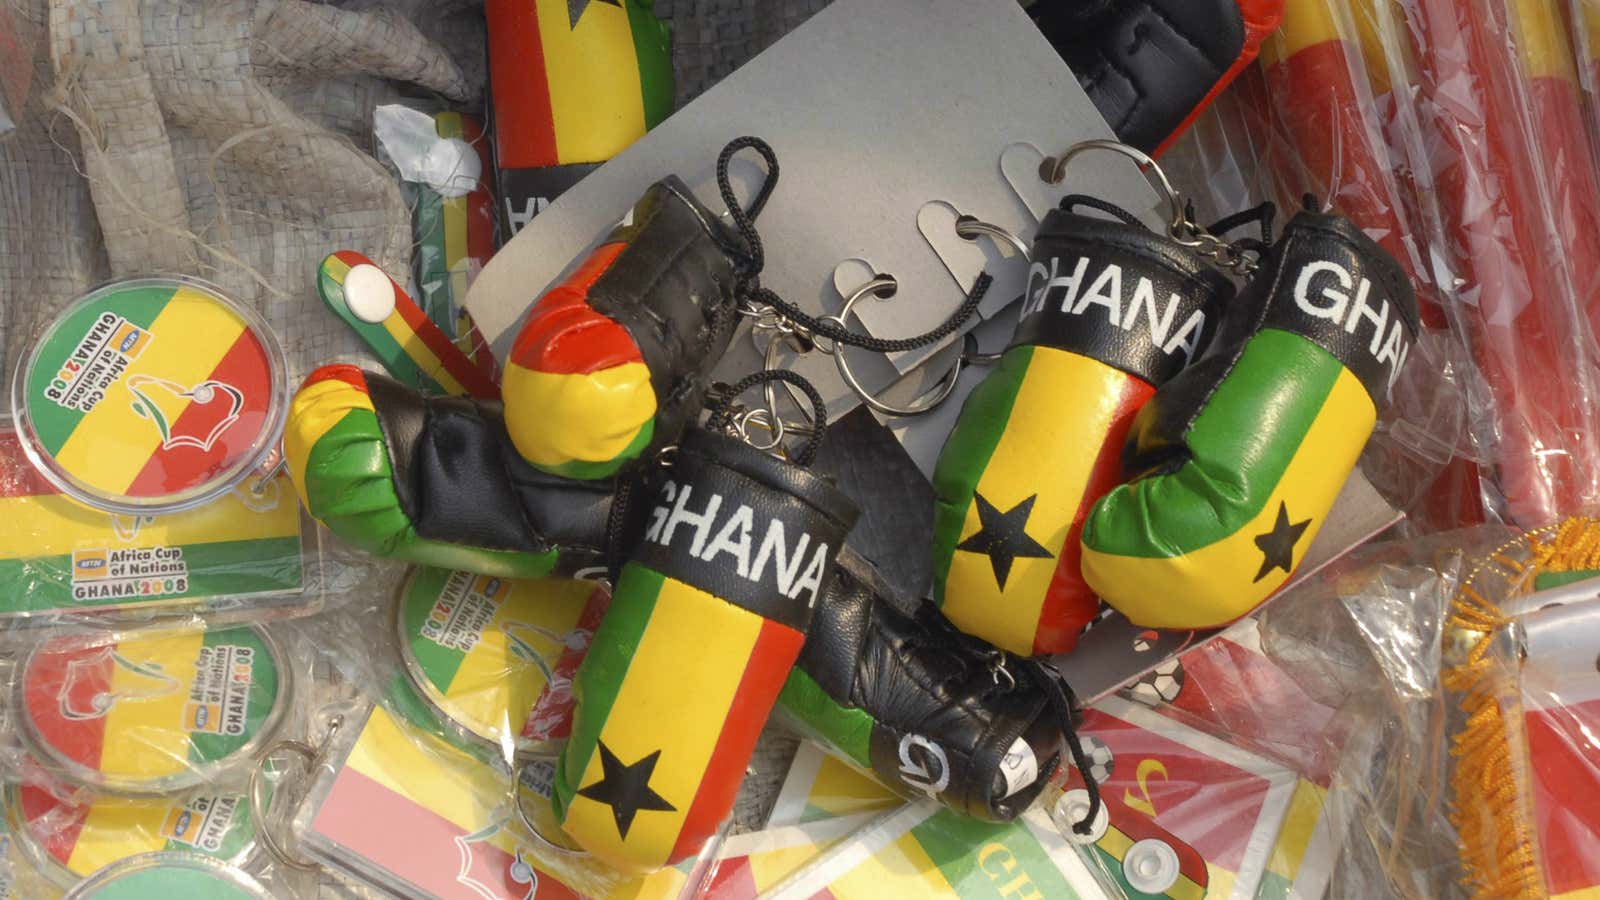 Ghana’s punching hard